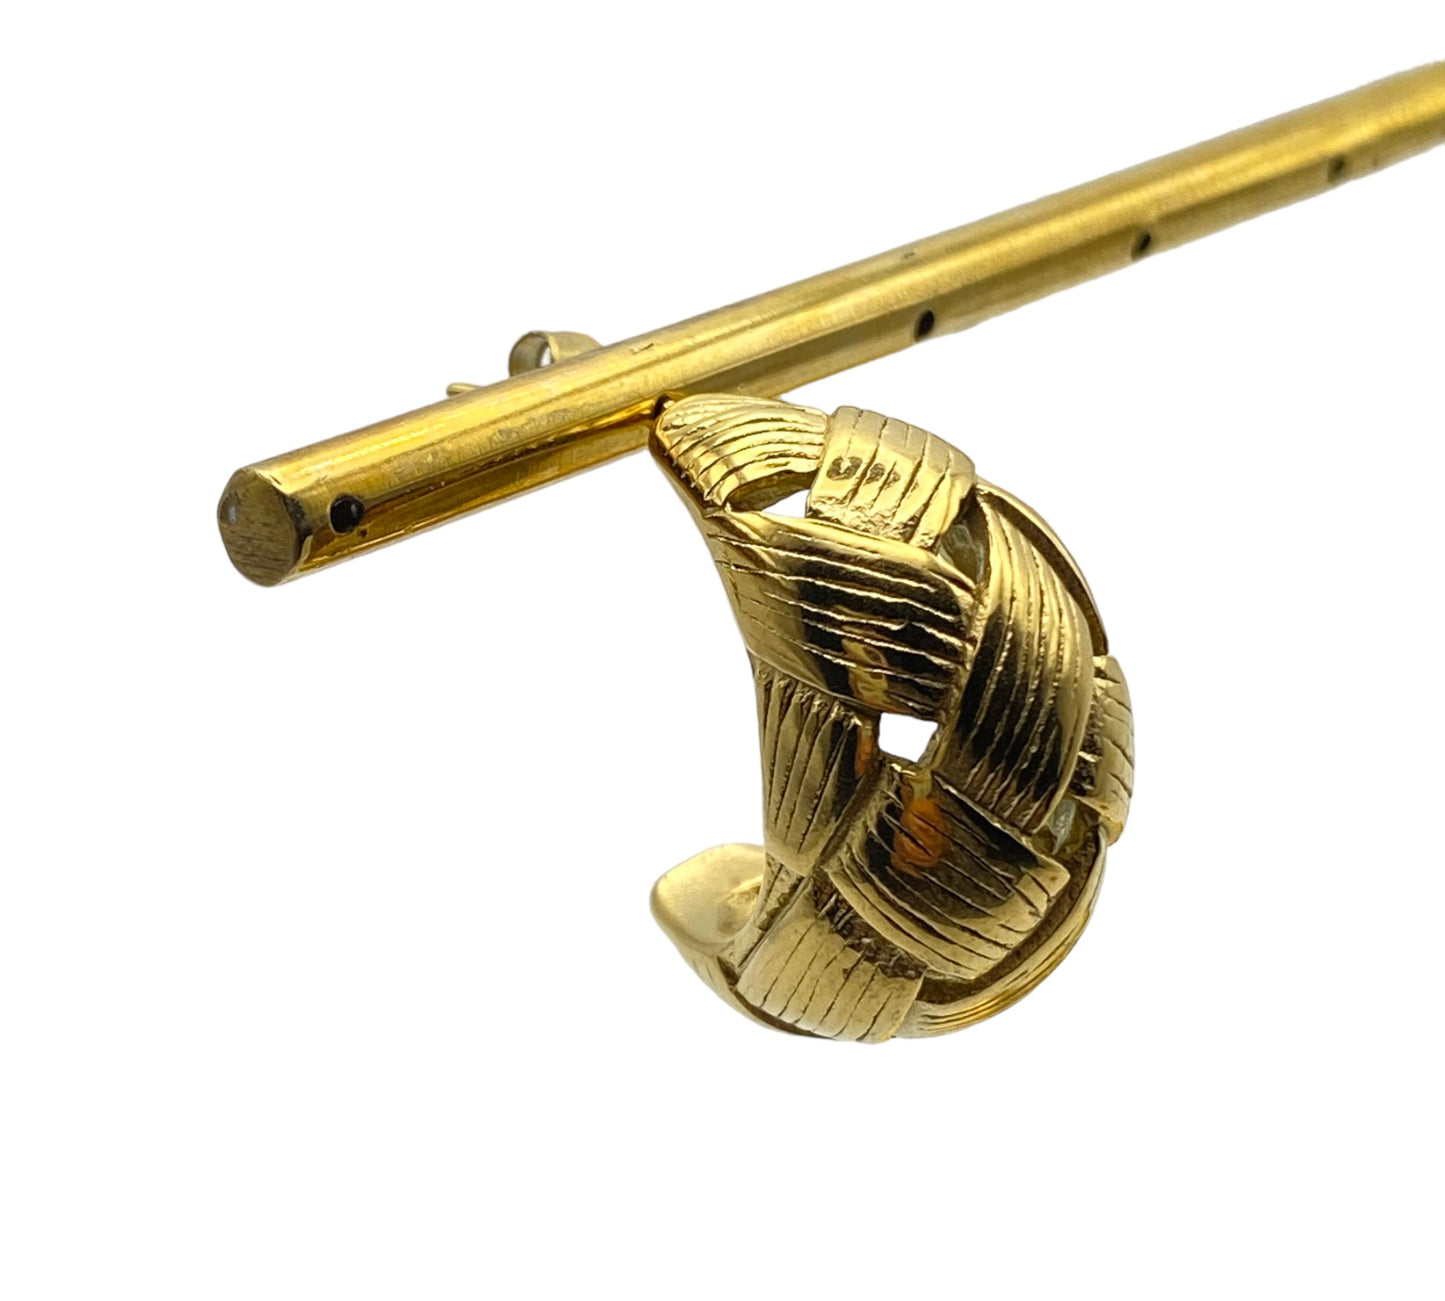 "PLAIT" gold plated open hoop earrings